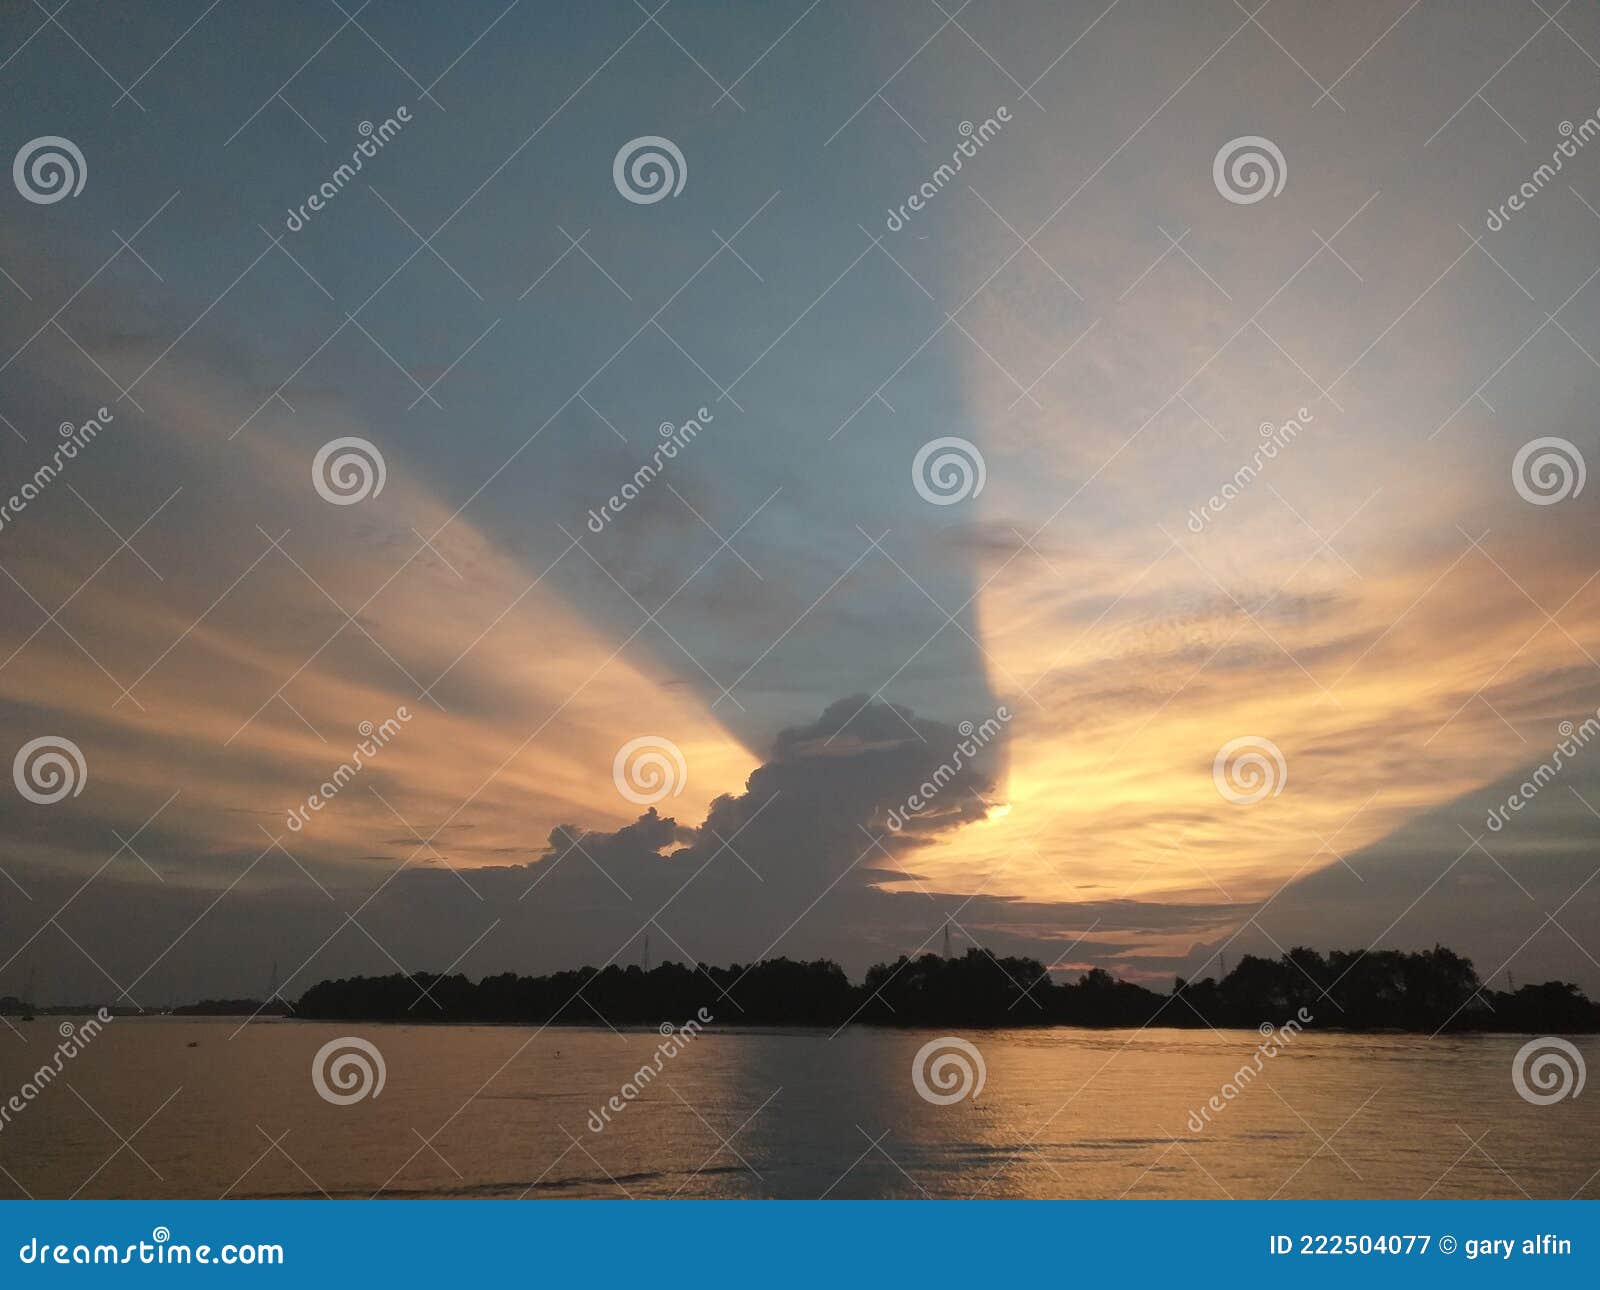 Twilight in the Equatorial Sky Stock Image - Image of twilight, equator